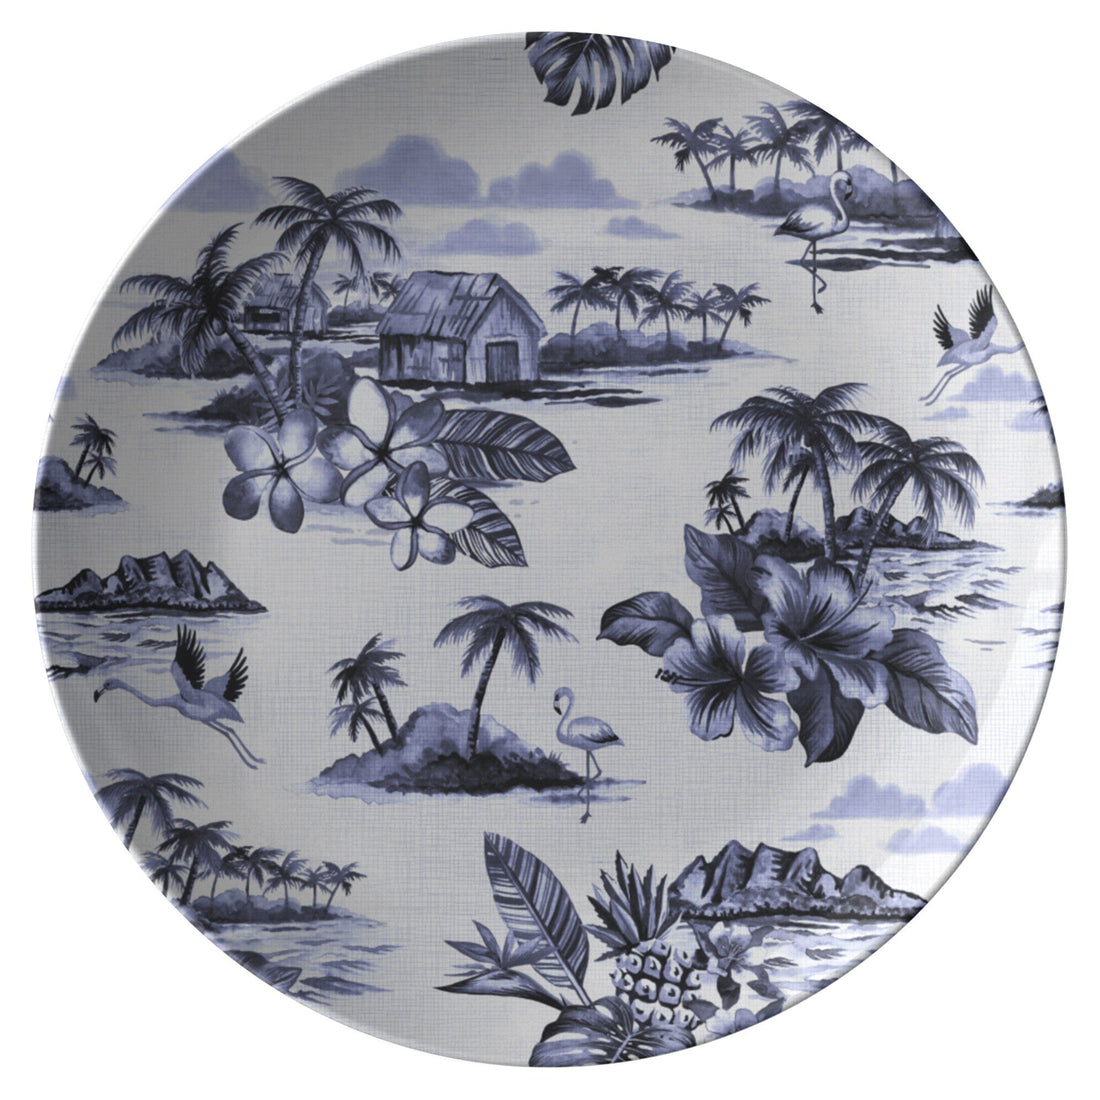 Kate McEnroe New York Dinner Plate in Vintage Hawaiian Tropical Island Scenes Plates